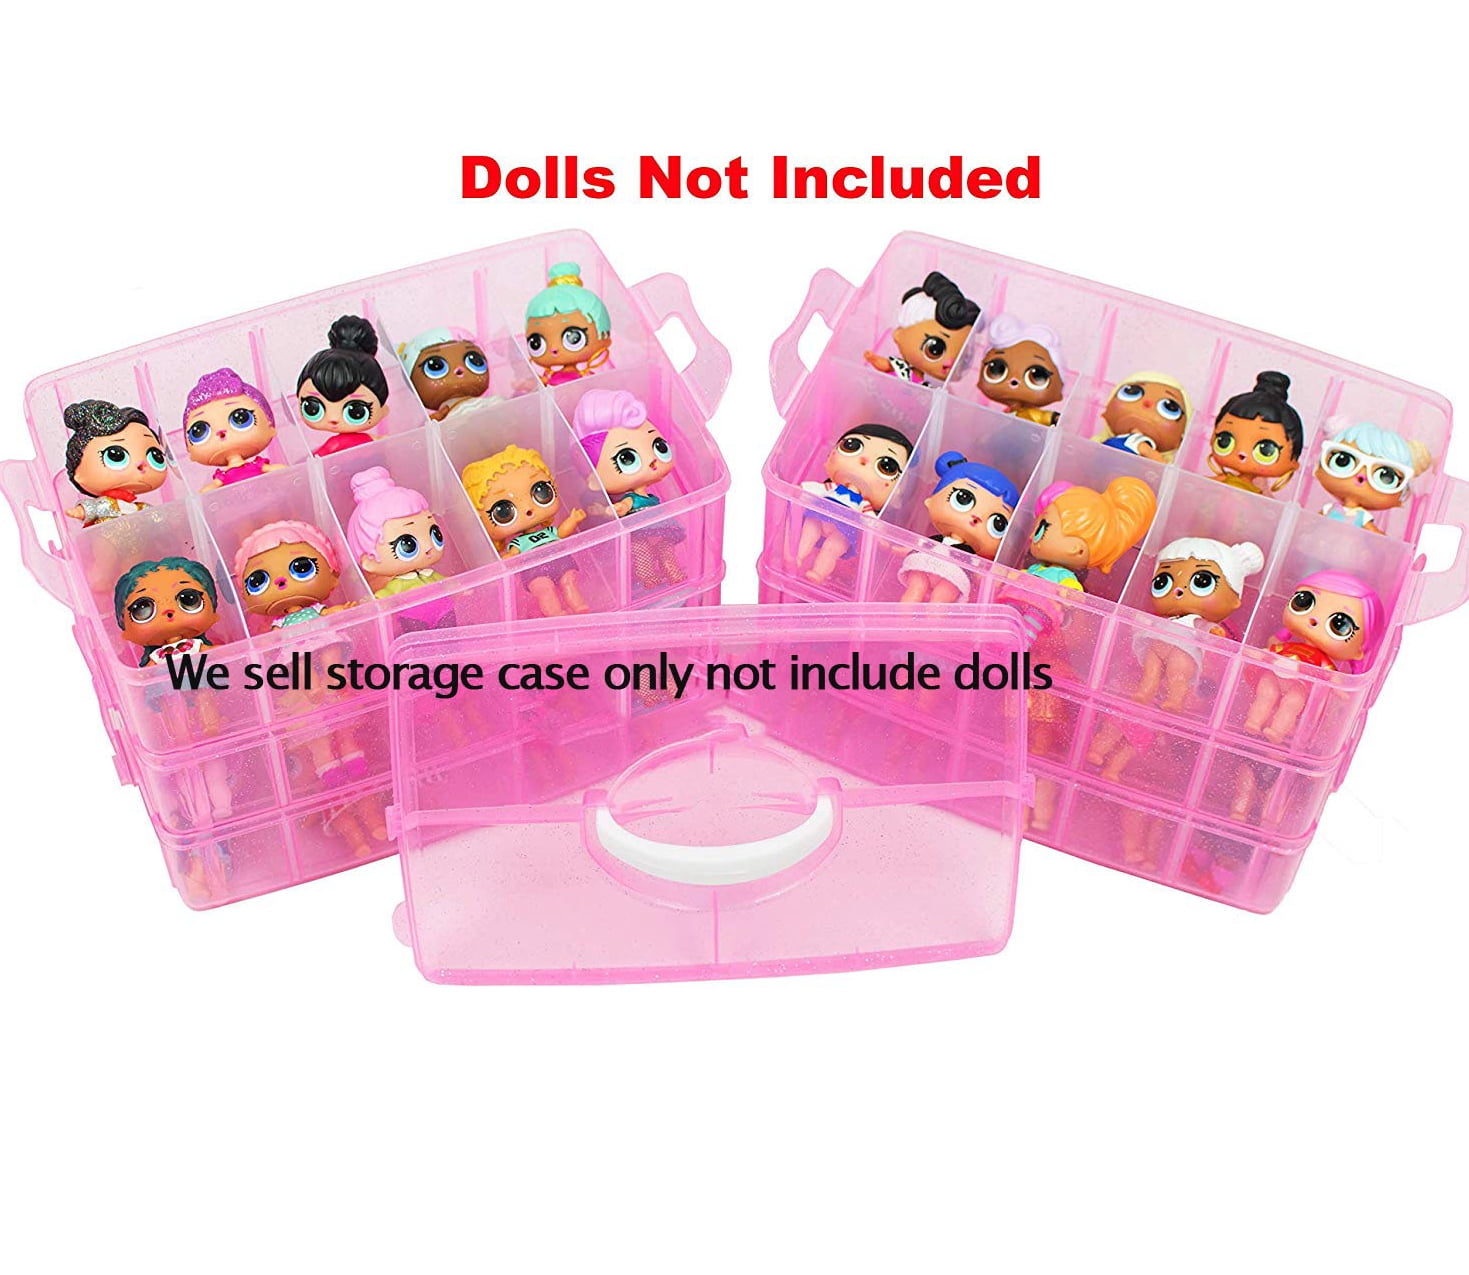 doll accessory storage